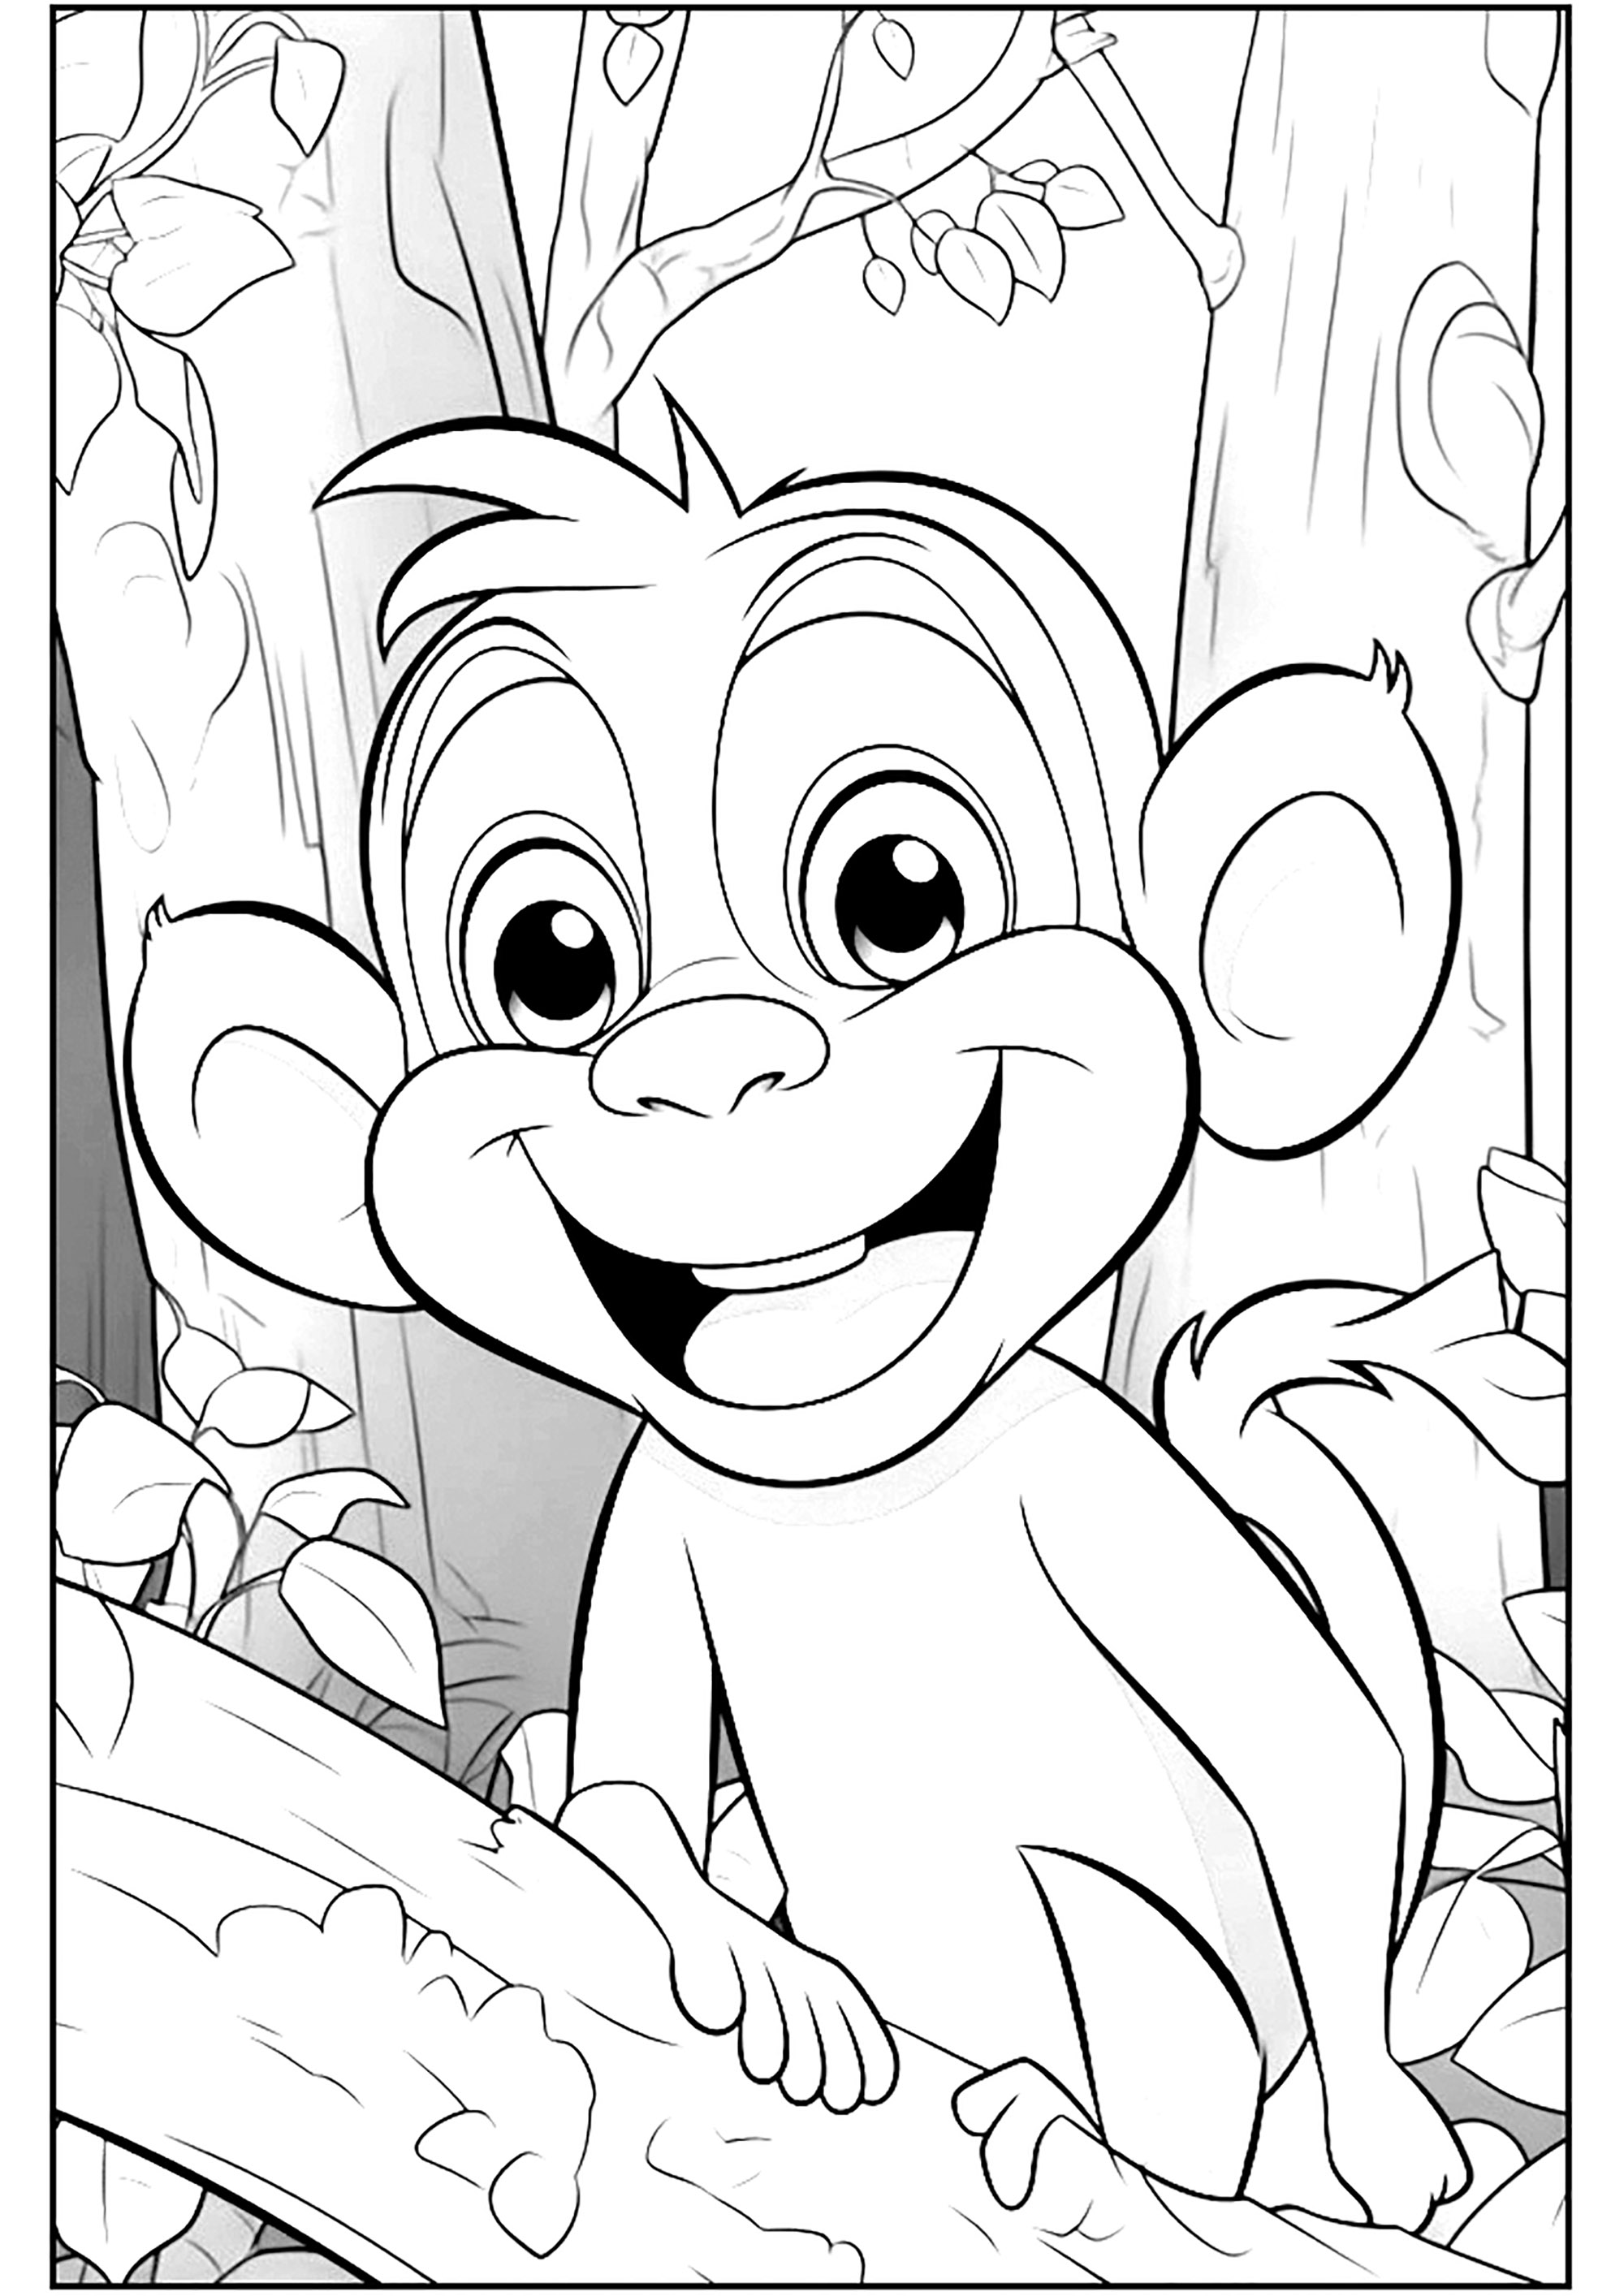 Macaco jovem na selva